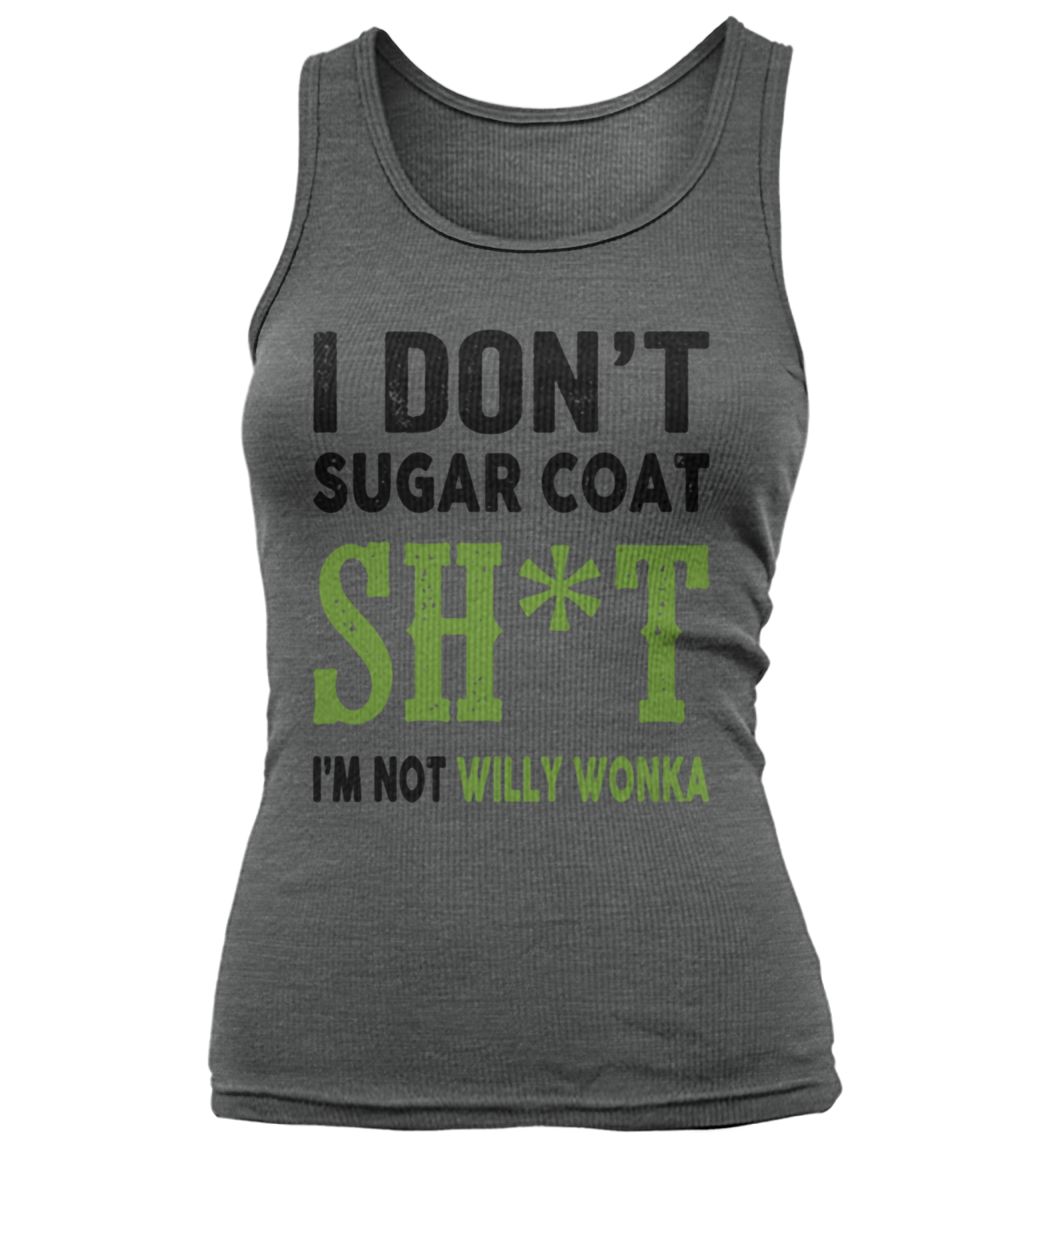 I don't sugar coat shit I'm not willy wonka women's tank top